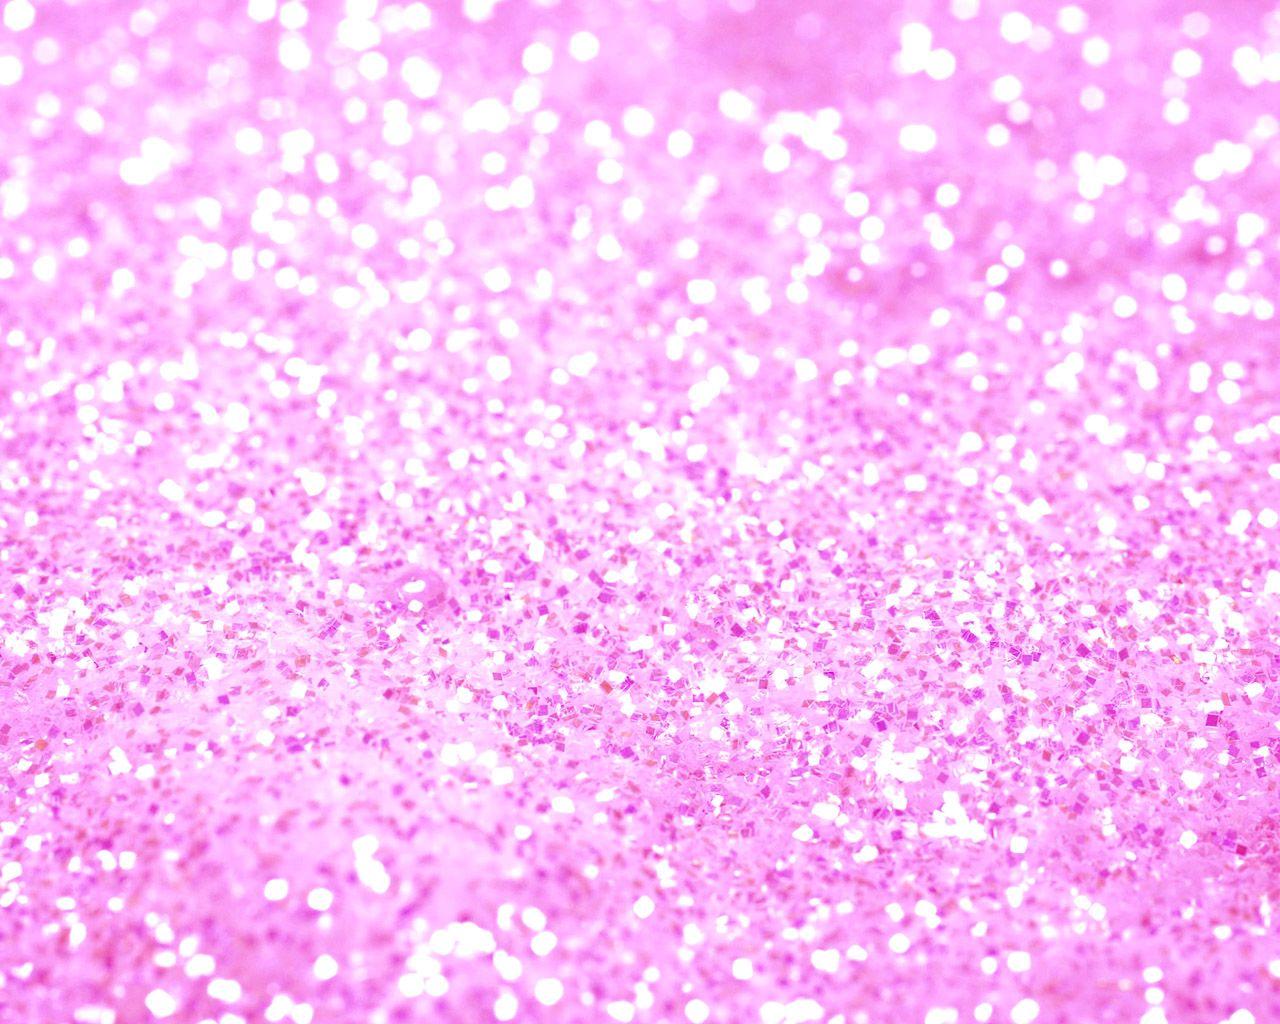 Pink Glitter Wallpaper 26002 1280x1024 px